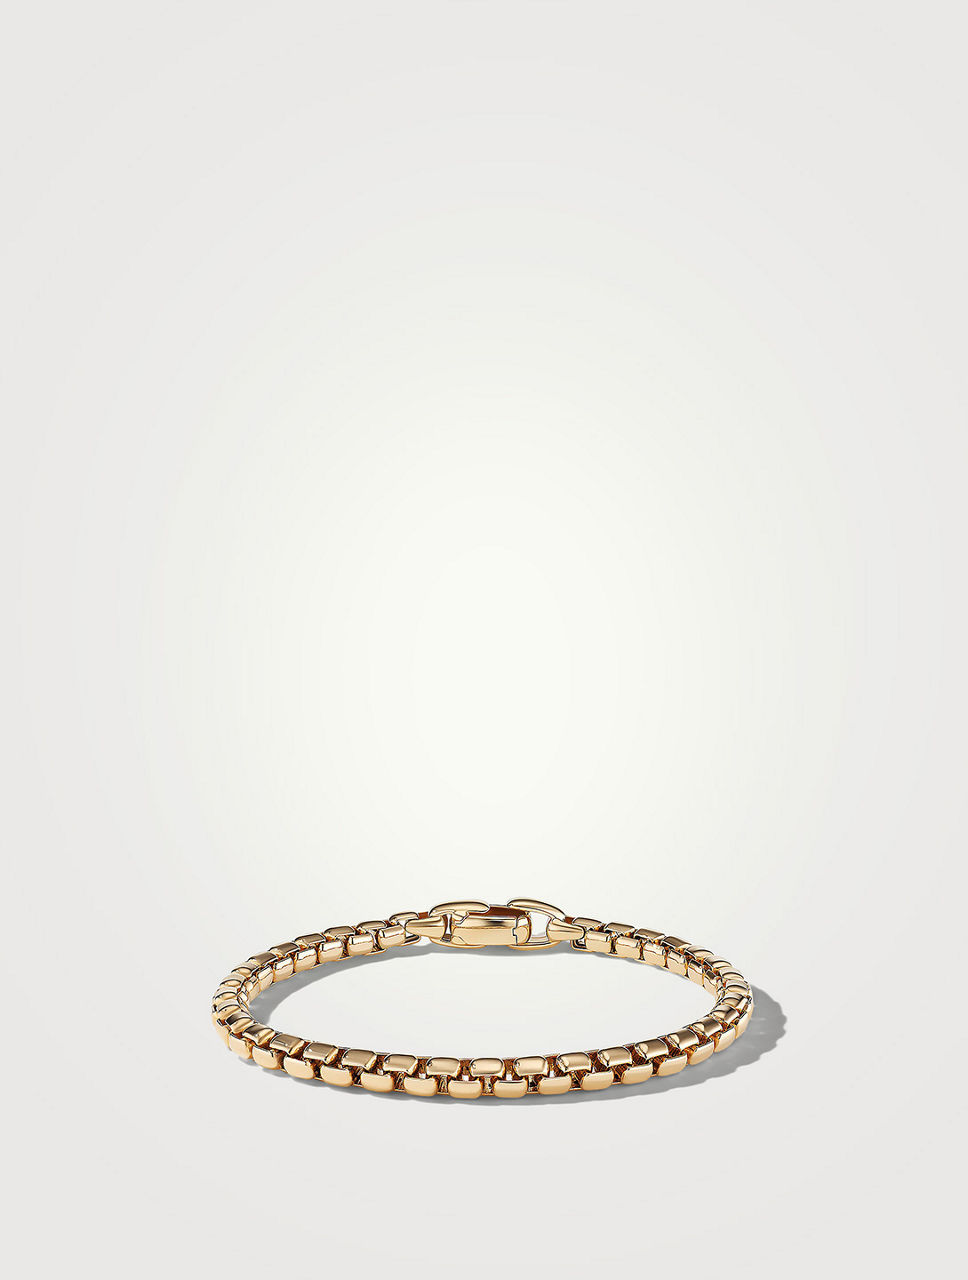 David Yurman Box Chain Bracelet in 18K Gold, 5mm